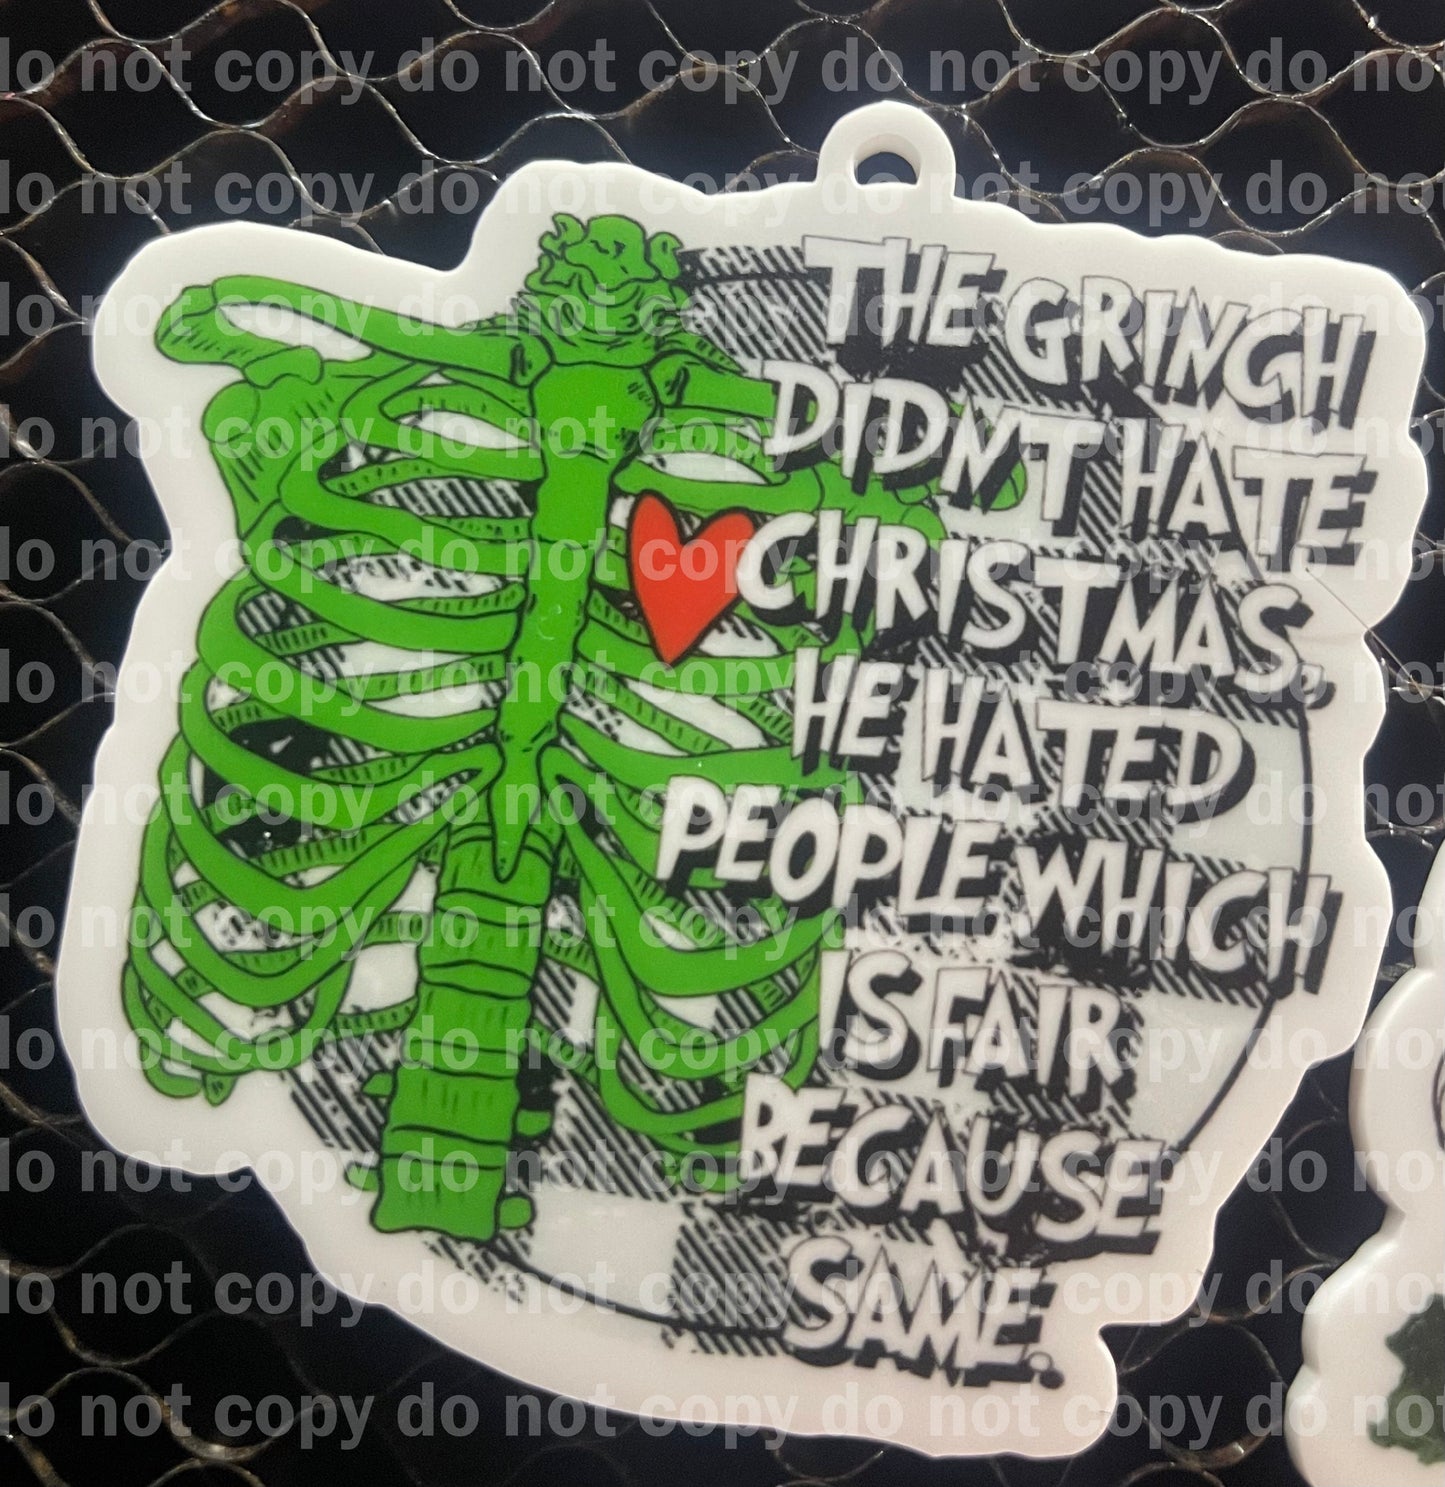 Didn't hate Christmas, he hated people Christmas ornament uv print and acrylic